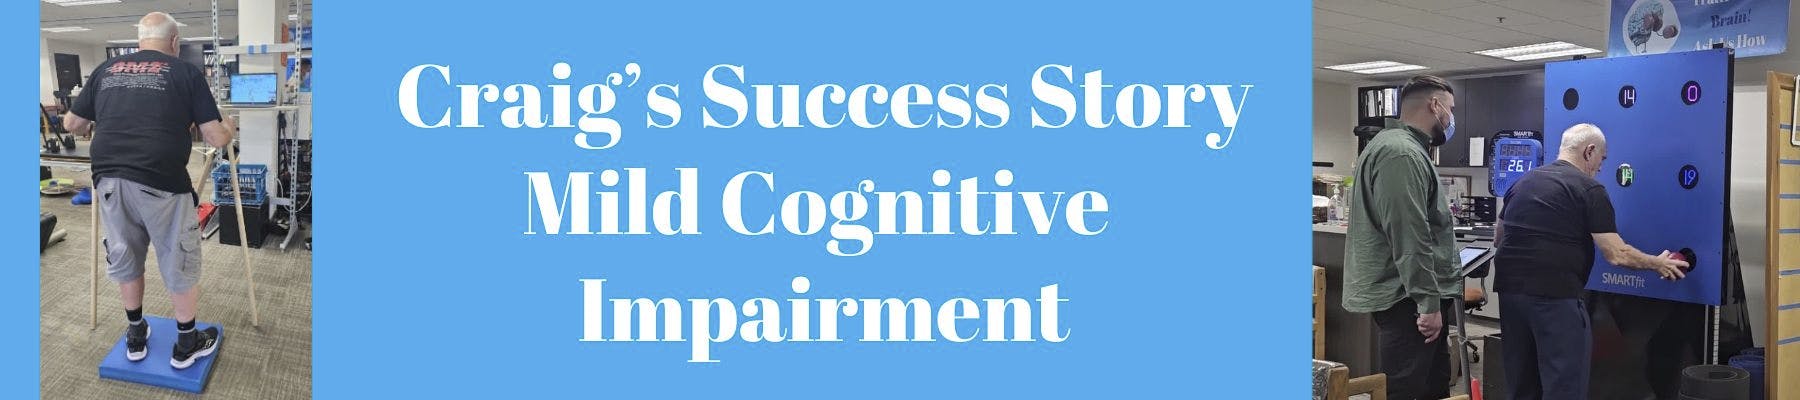 Craig's Success Story: Mld Cognitive Impairment Dementia Dual Tasking Neuroplasticity SMARTfit Atlantis PT and OT Torrance South Bay Redondo Beach Palos Verdes San Pedro